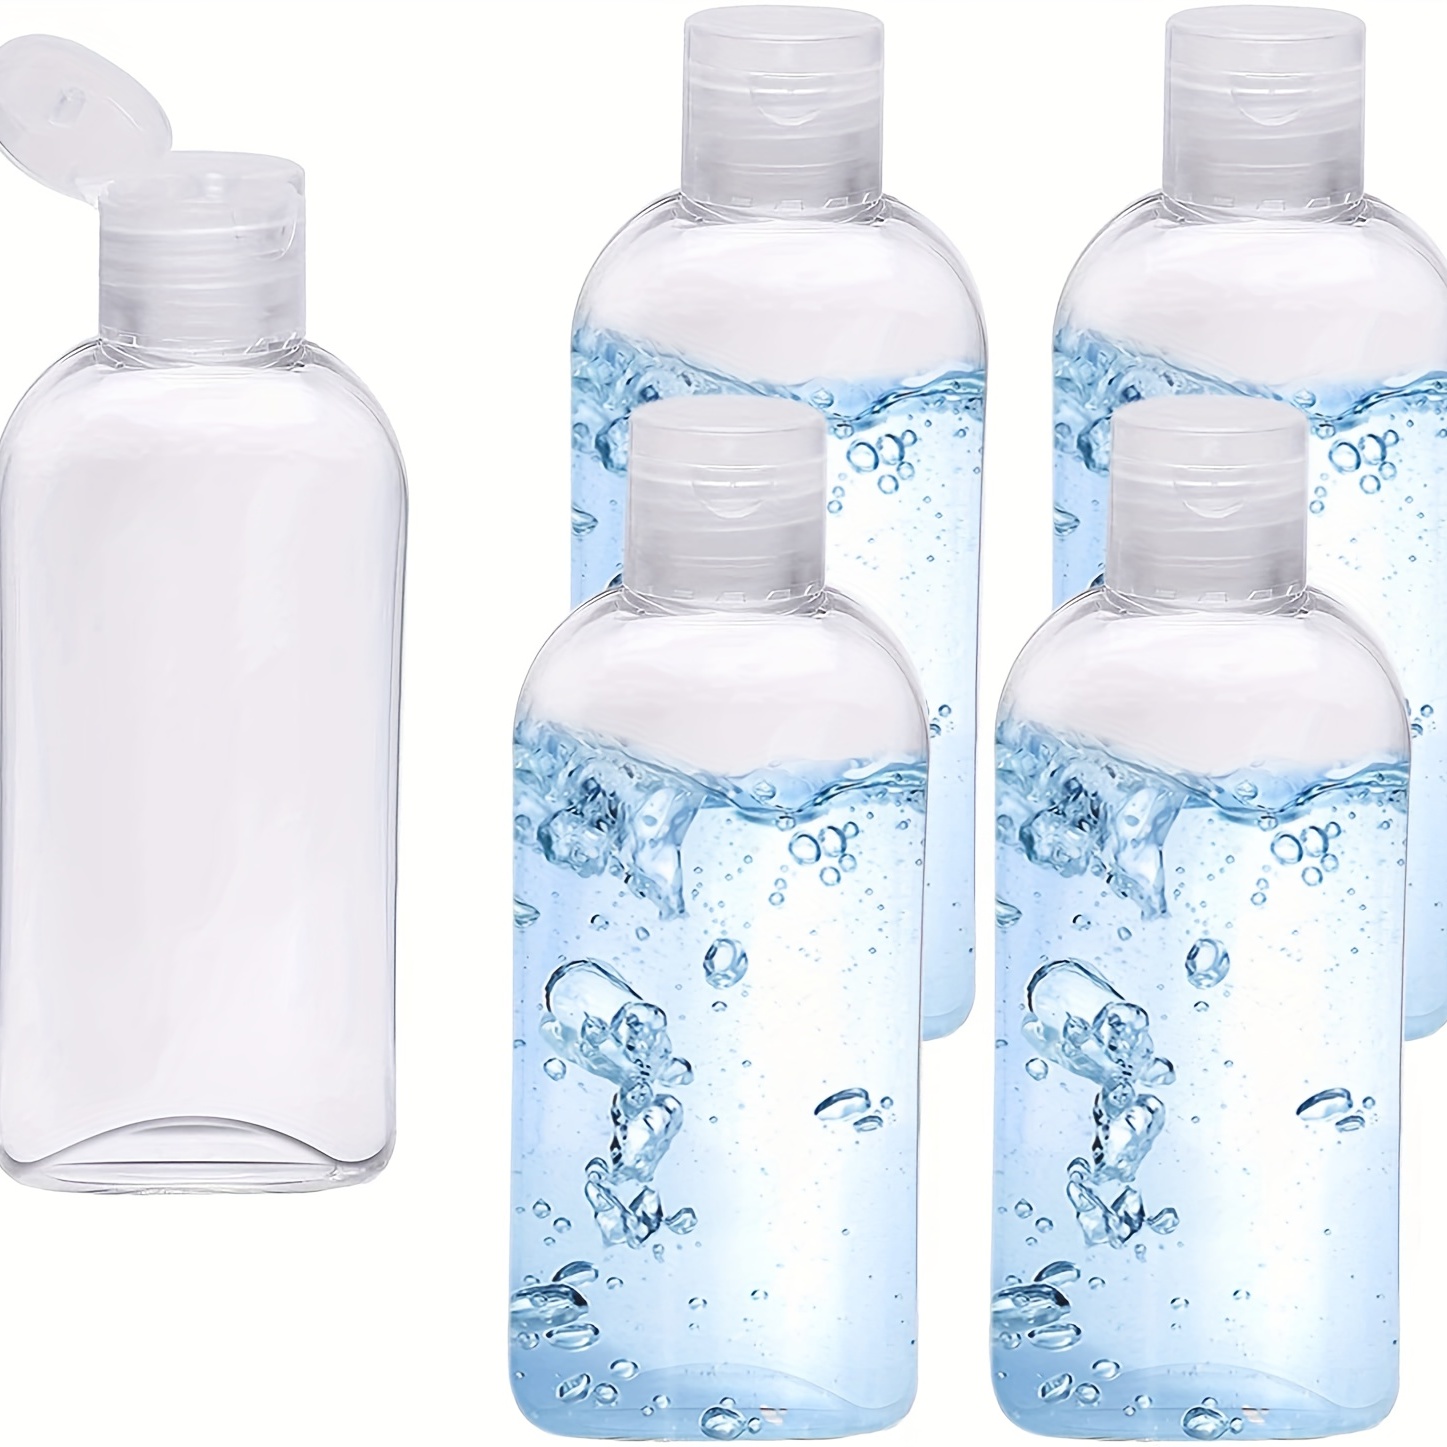 Paquete de 48 mini botellas de licor – Botellas de plástico reutilizables  de 1.7 fl oz (1.7 fl oz), botella de alcohol vacía con tapa de rosca negra